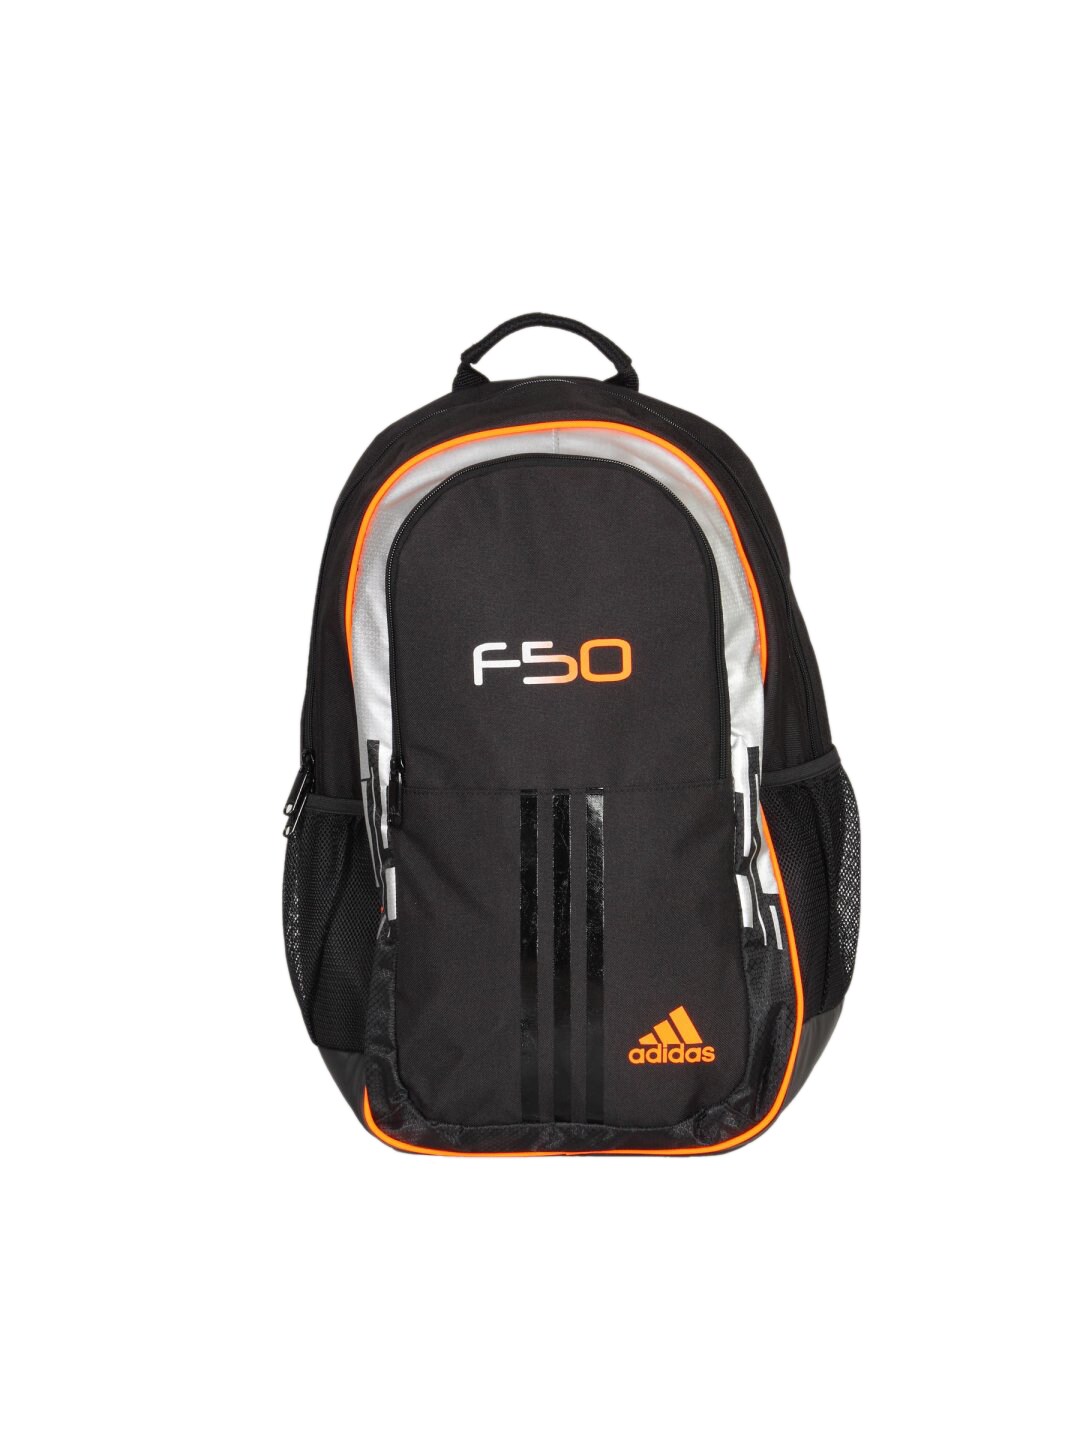 ADIDAS Men F50 Black Metsilver Backpack